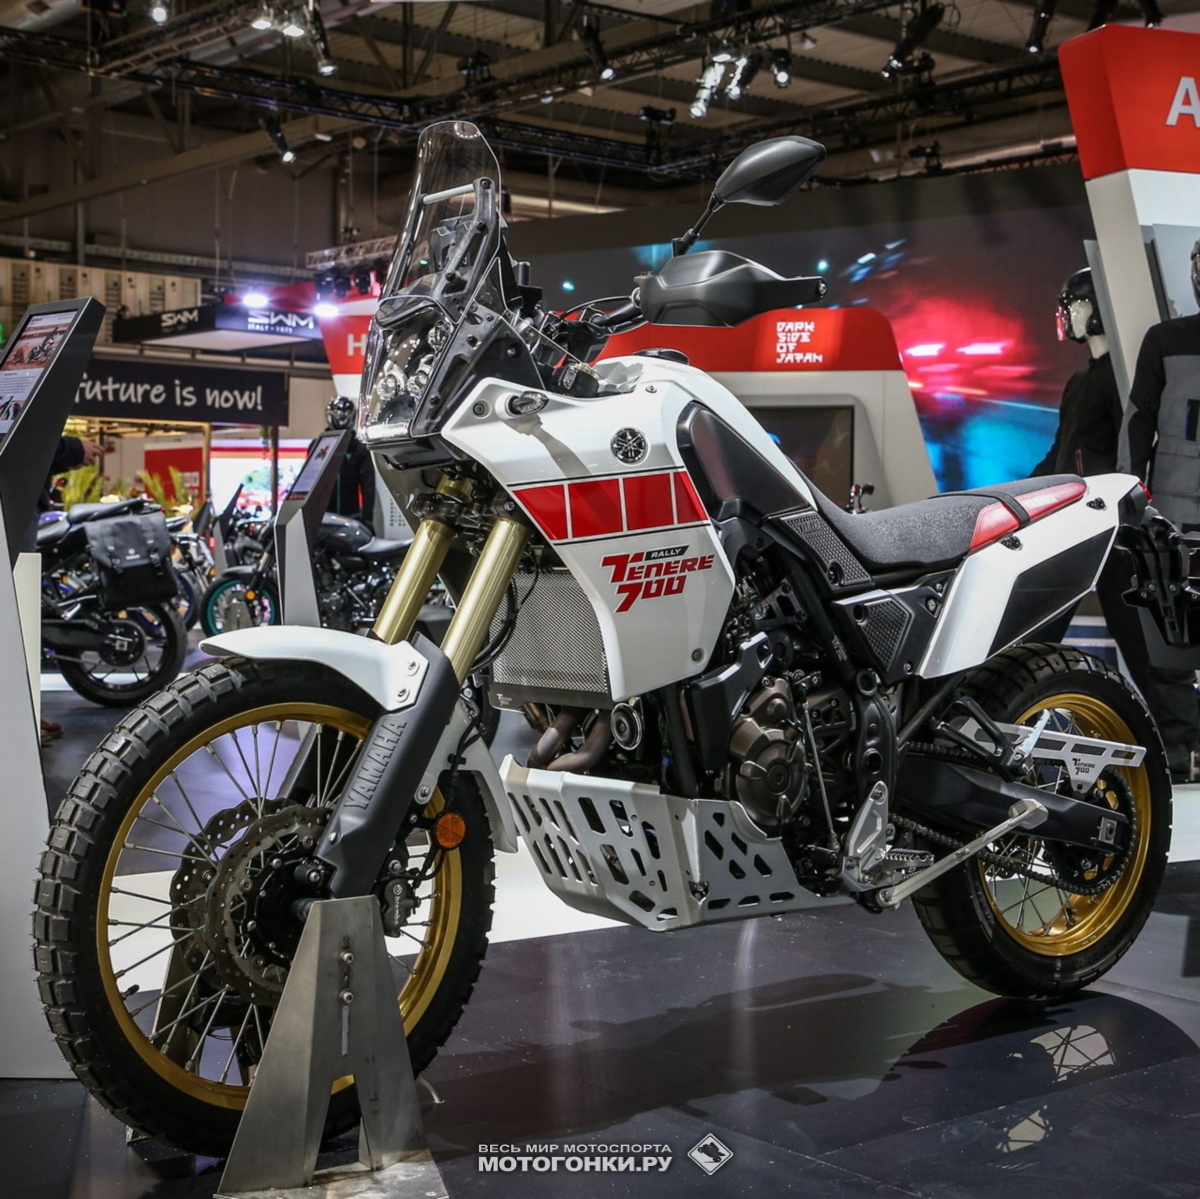 Миланский Мотосалон EICMA-2021: стенд Yamaha Motor Europe